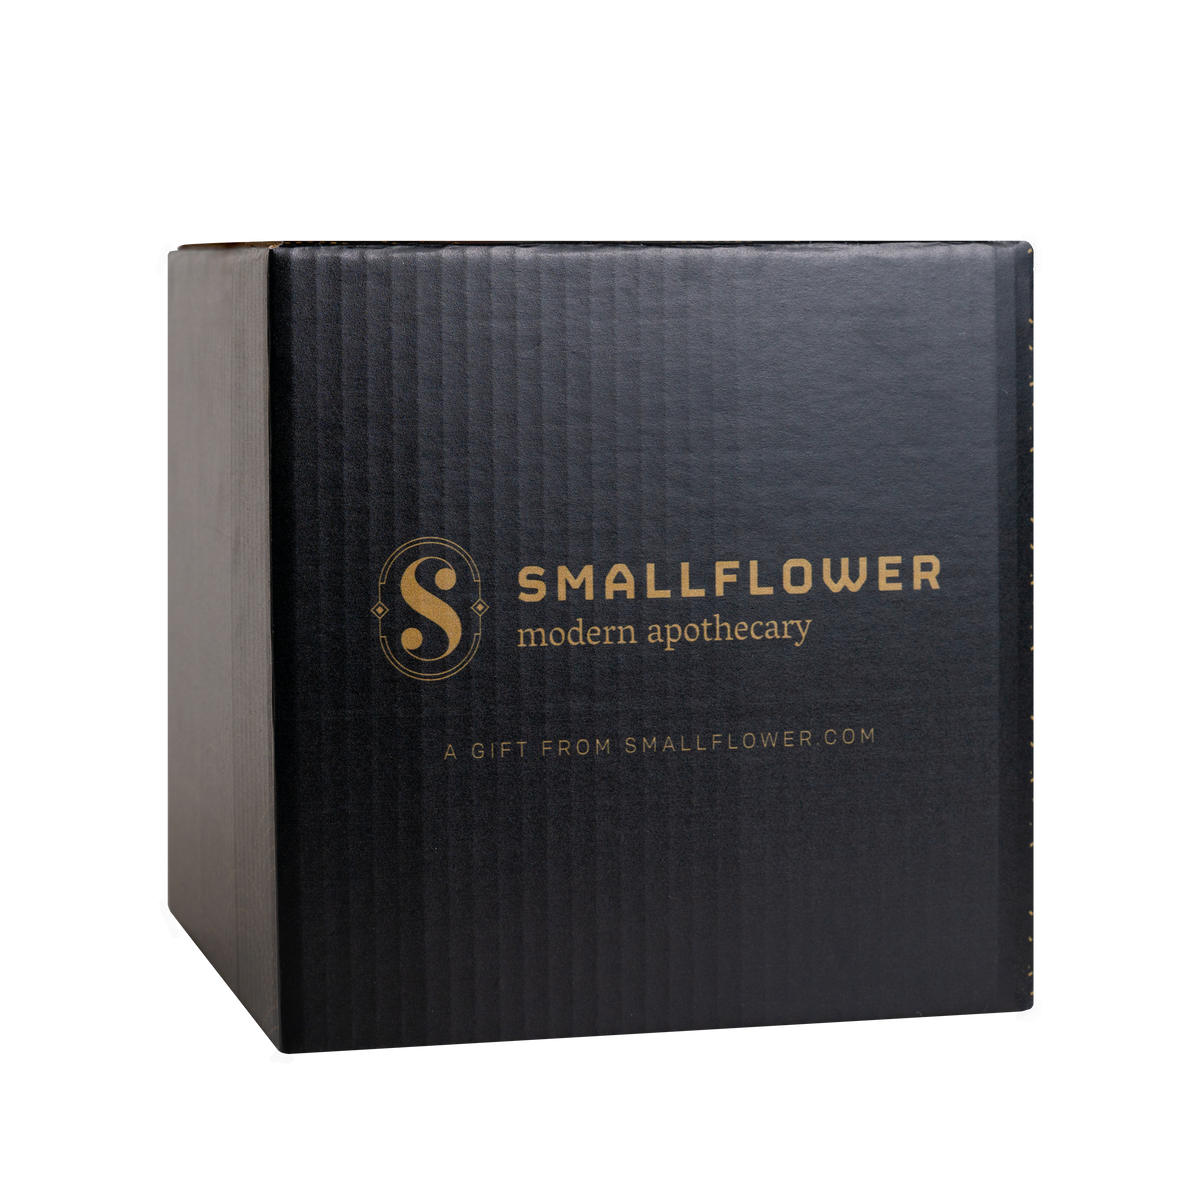 Primary image of Smallflower Gift Box